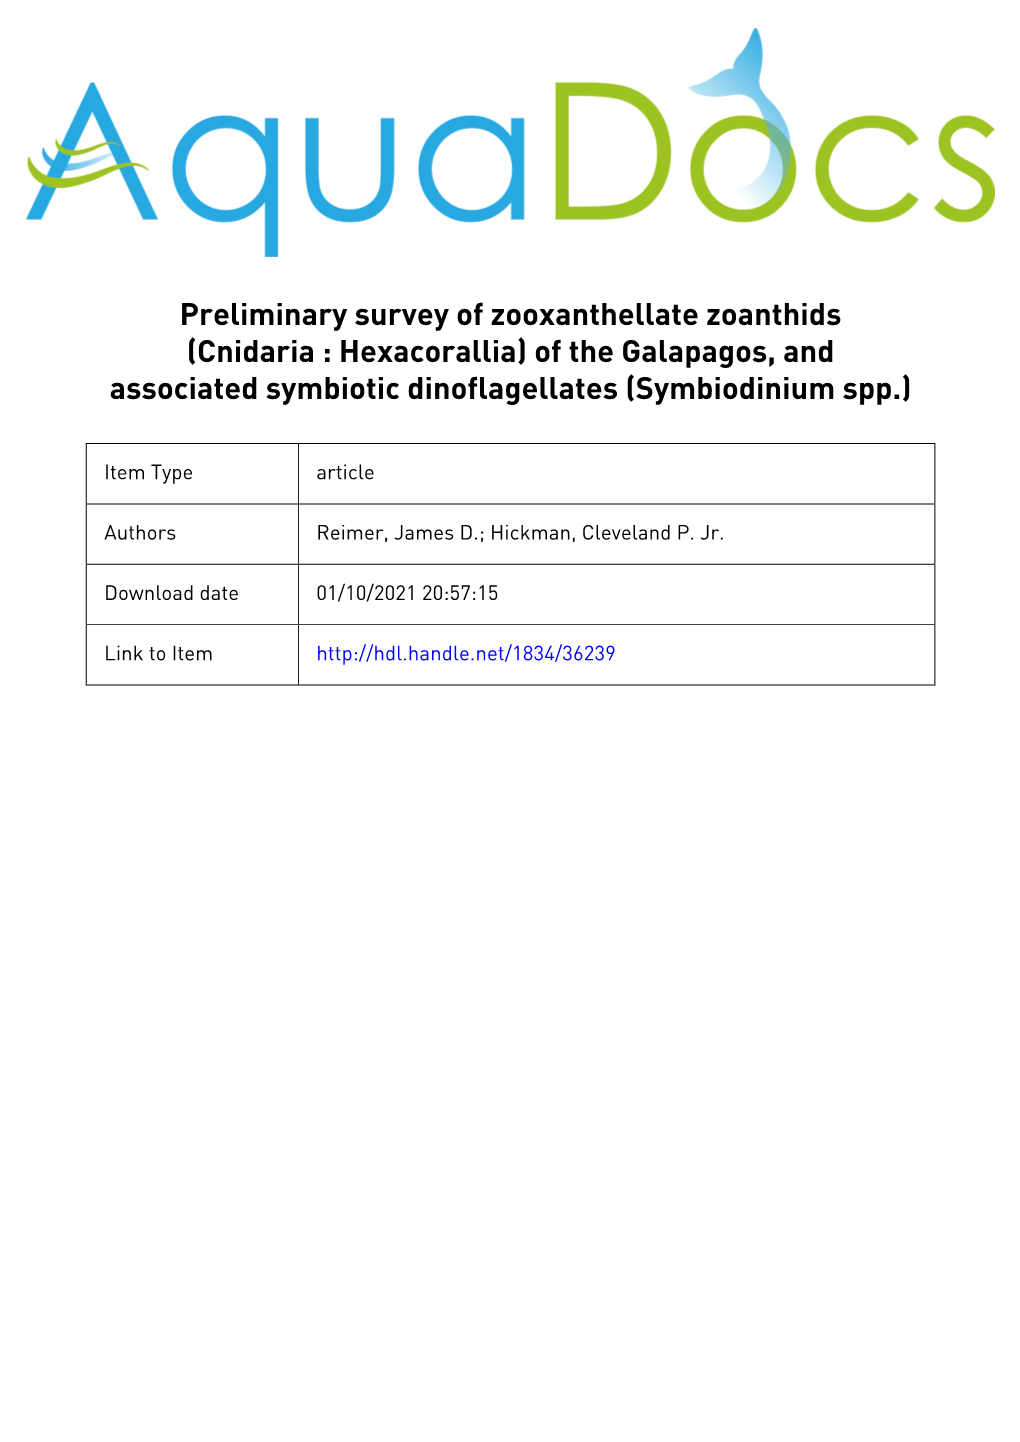 Preliminary Survey of Zooxanthellate Zoanthids (Cnidaria : Hexacorallia) of the Galapagos, and Associated Symbiotic Dinoflagellates (Symbiodinium Spp.)